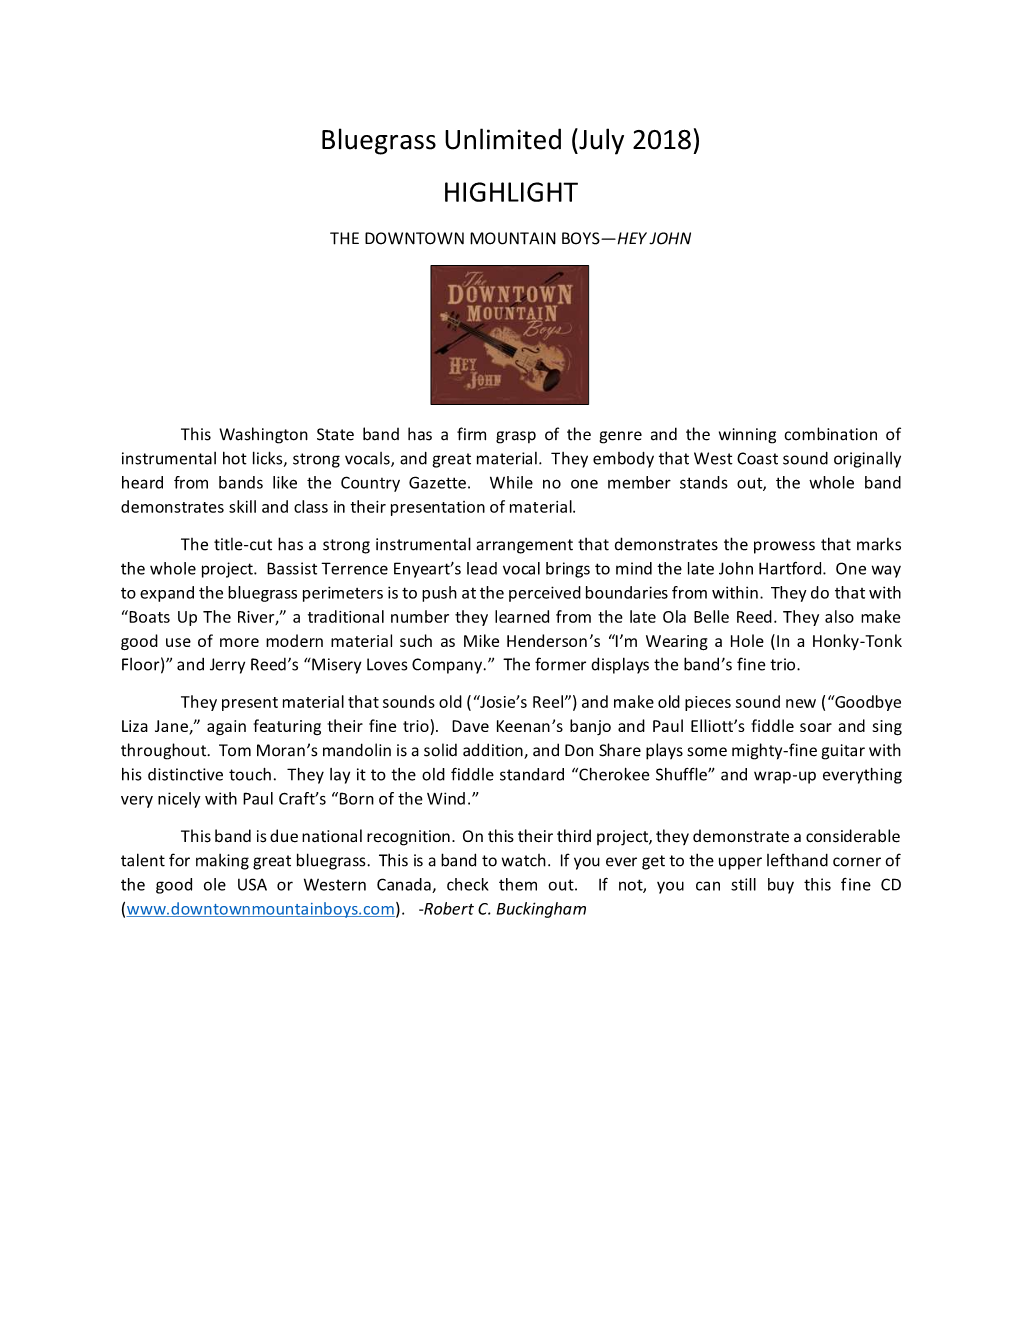 Bluegrass Unlimited (July 2018) HIGHLIGHT